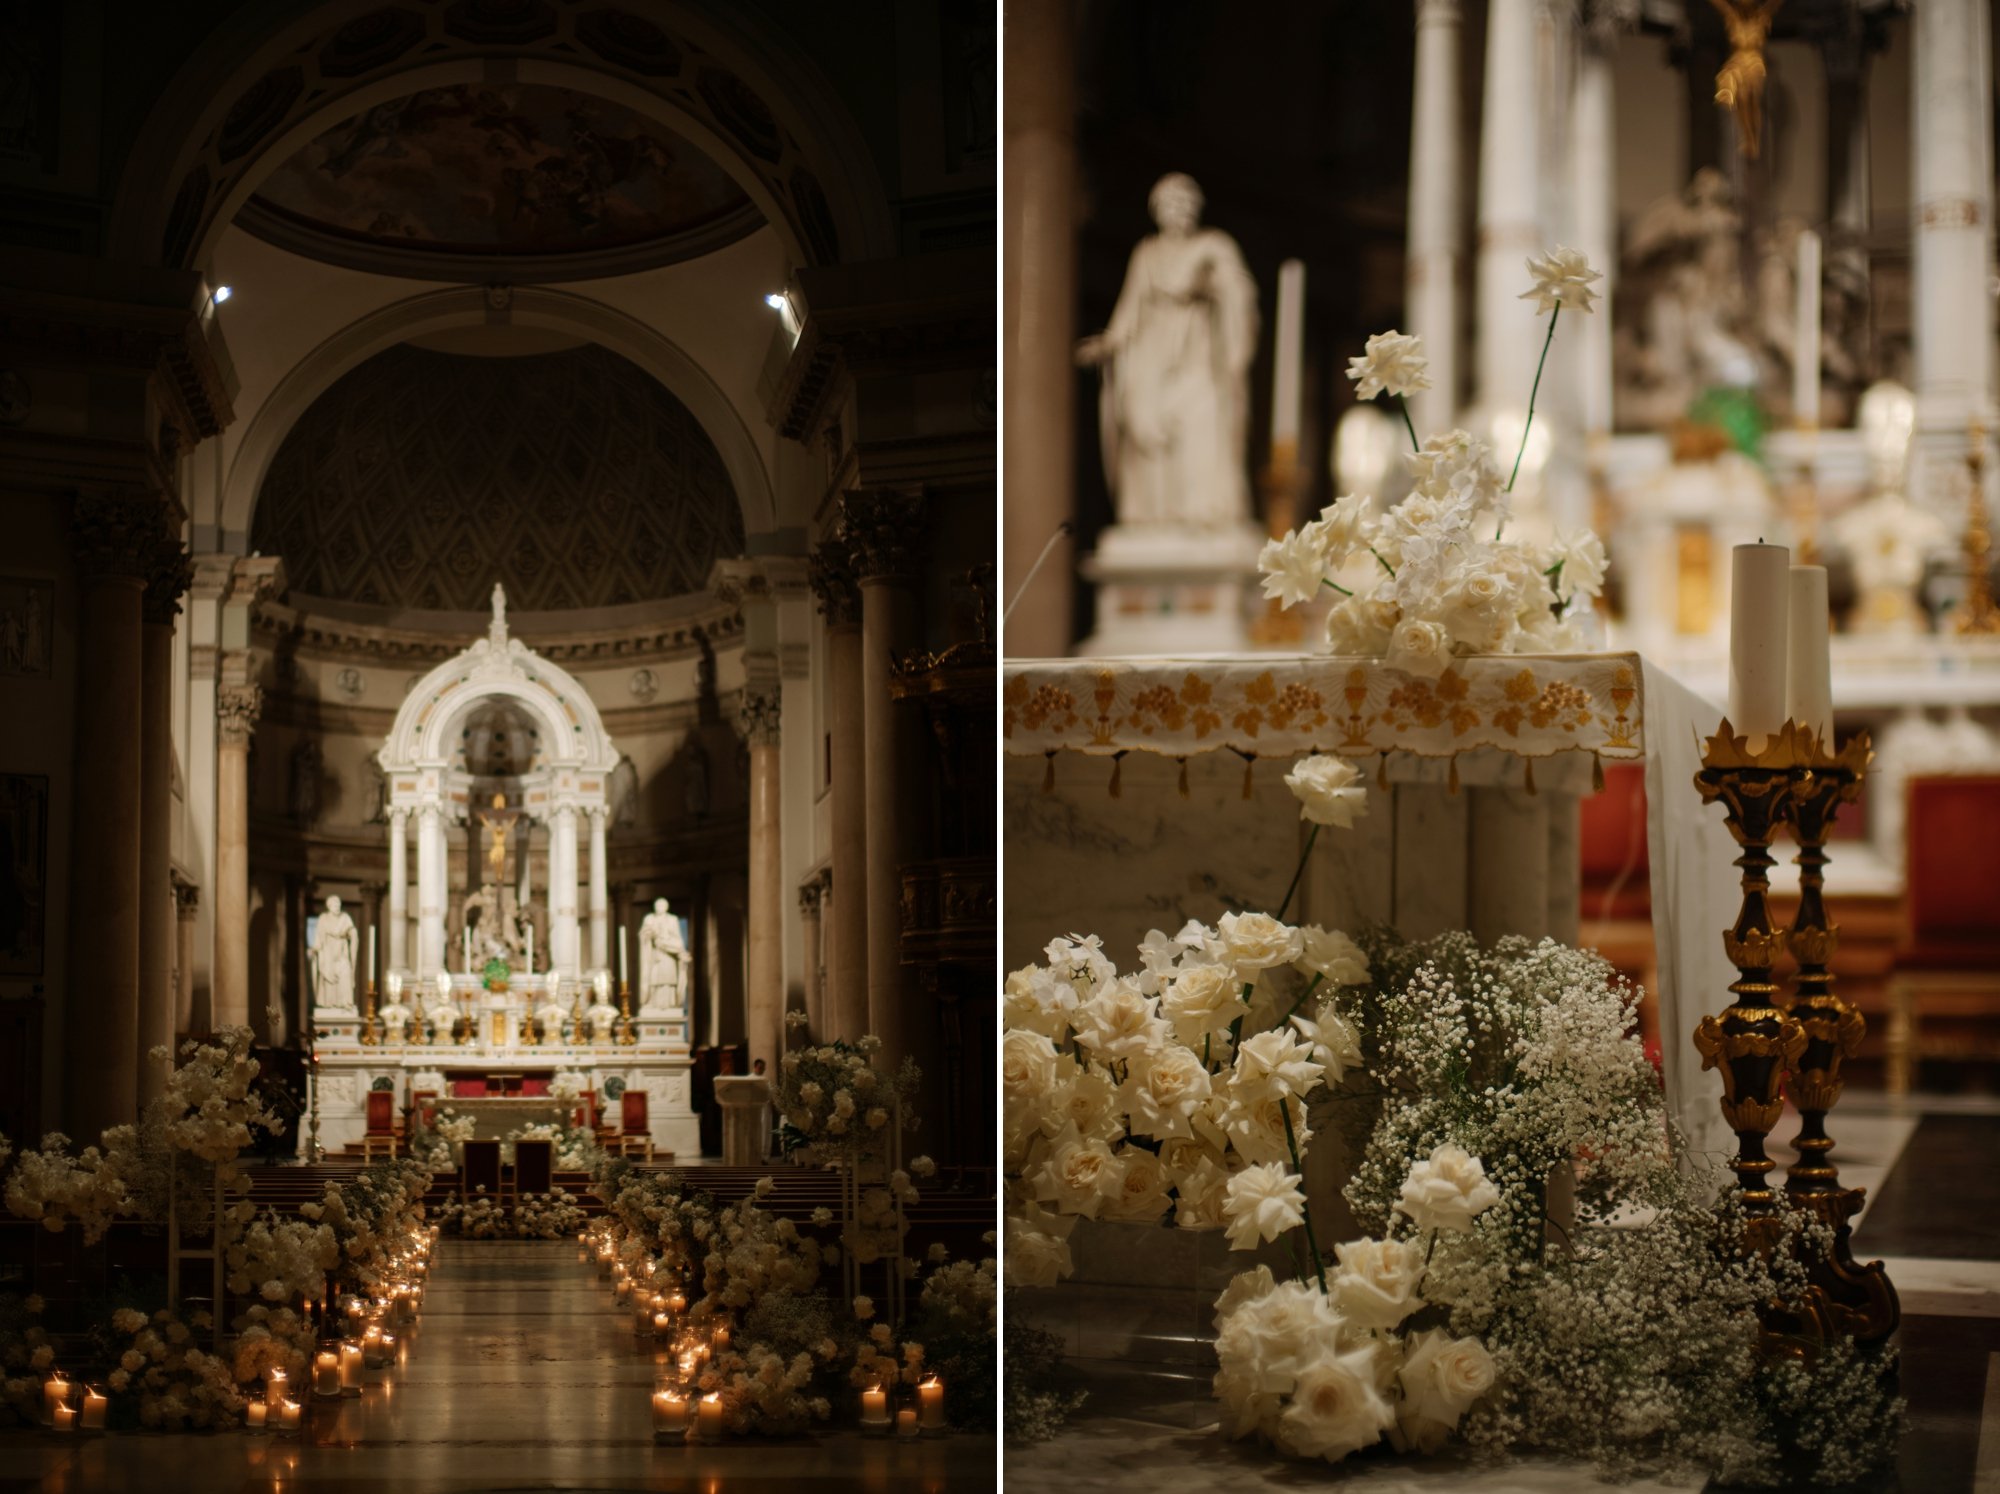 Prawira-Evelyn-Dolomites-Italy-Santre wedding-Yefta Gunawan-Jeriko MUA-Carol Kuntjoro Photography-45.jpg